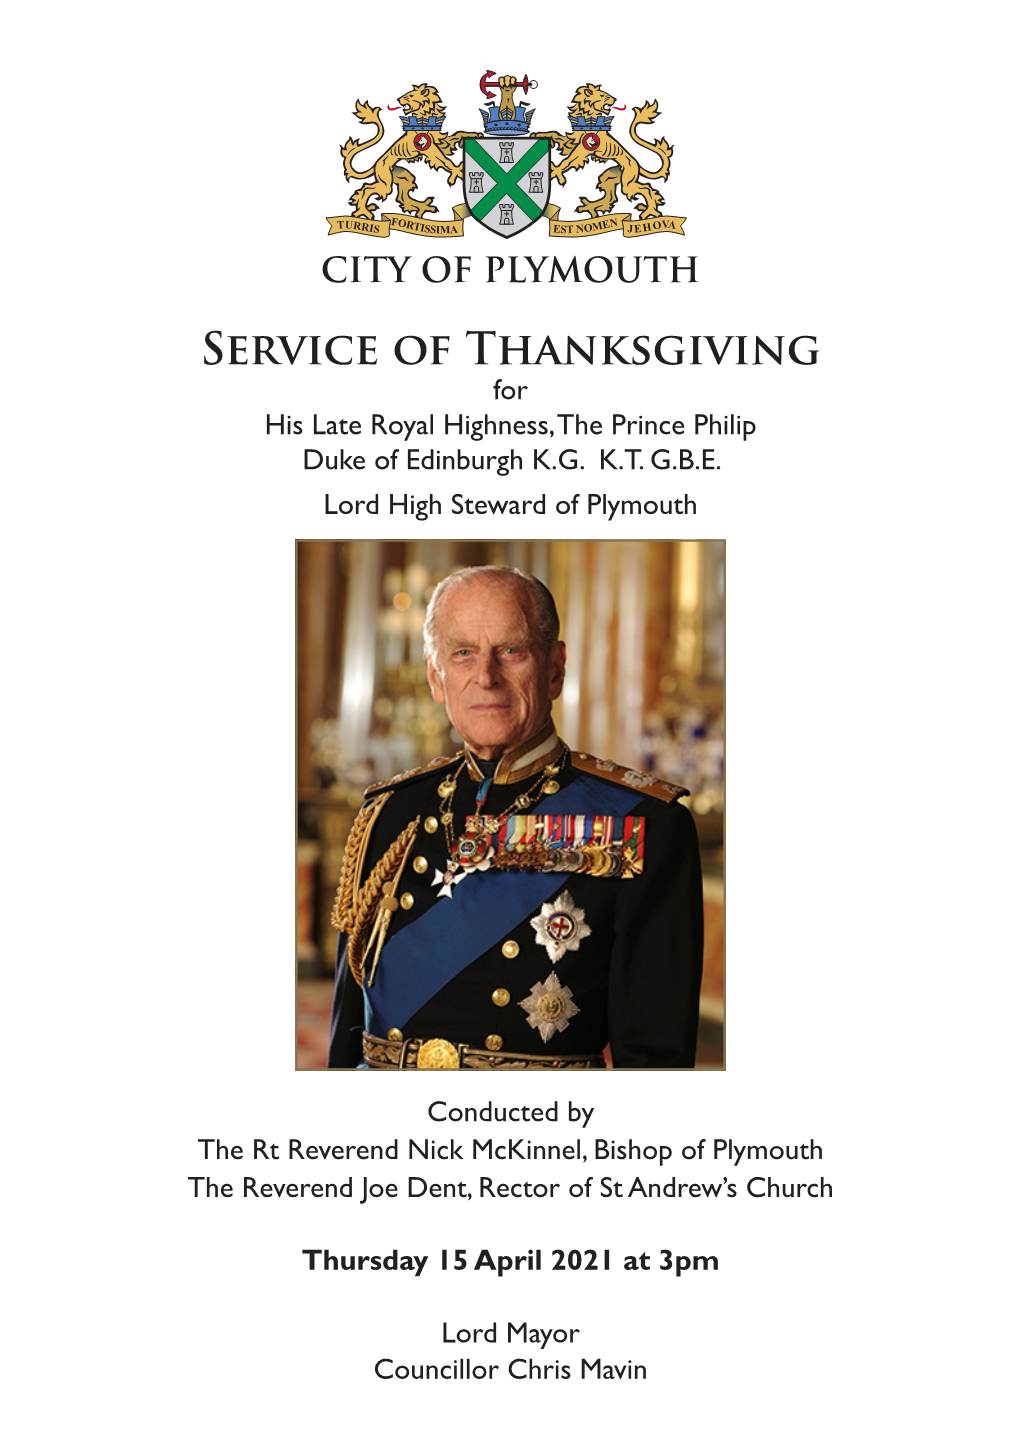 Service of Thanksgiving for His Late Royal Highness, the Prince Philip Duke of Edinburgh K.G